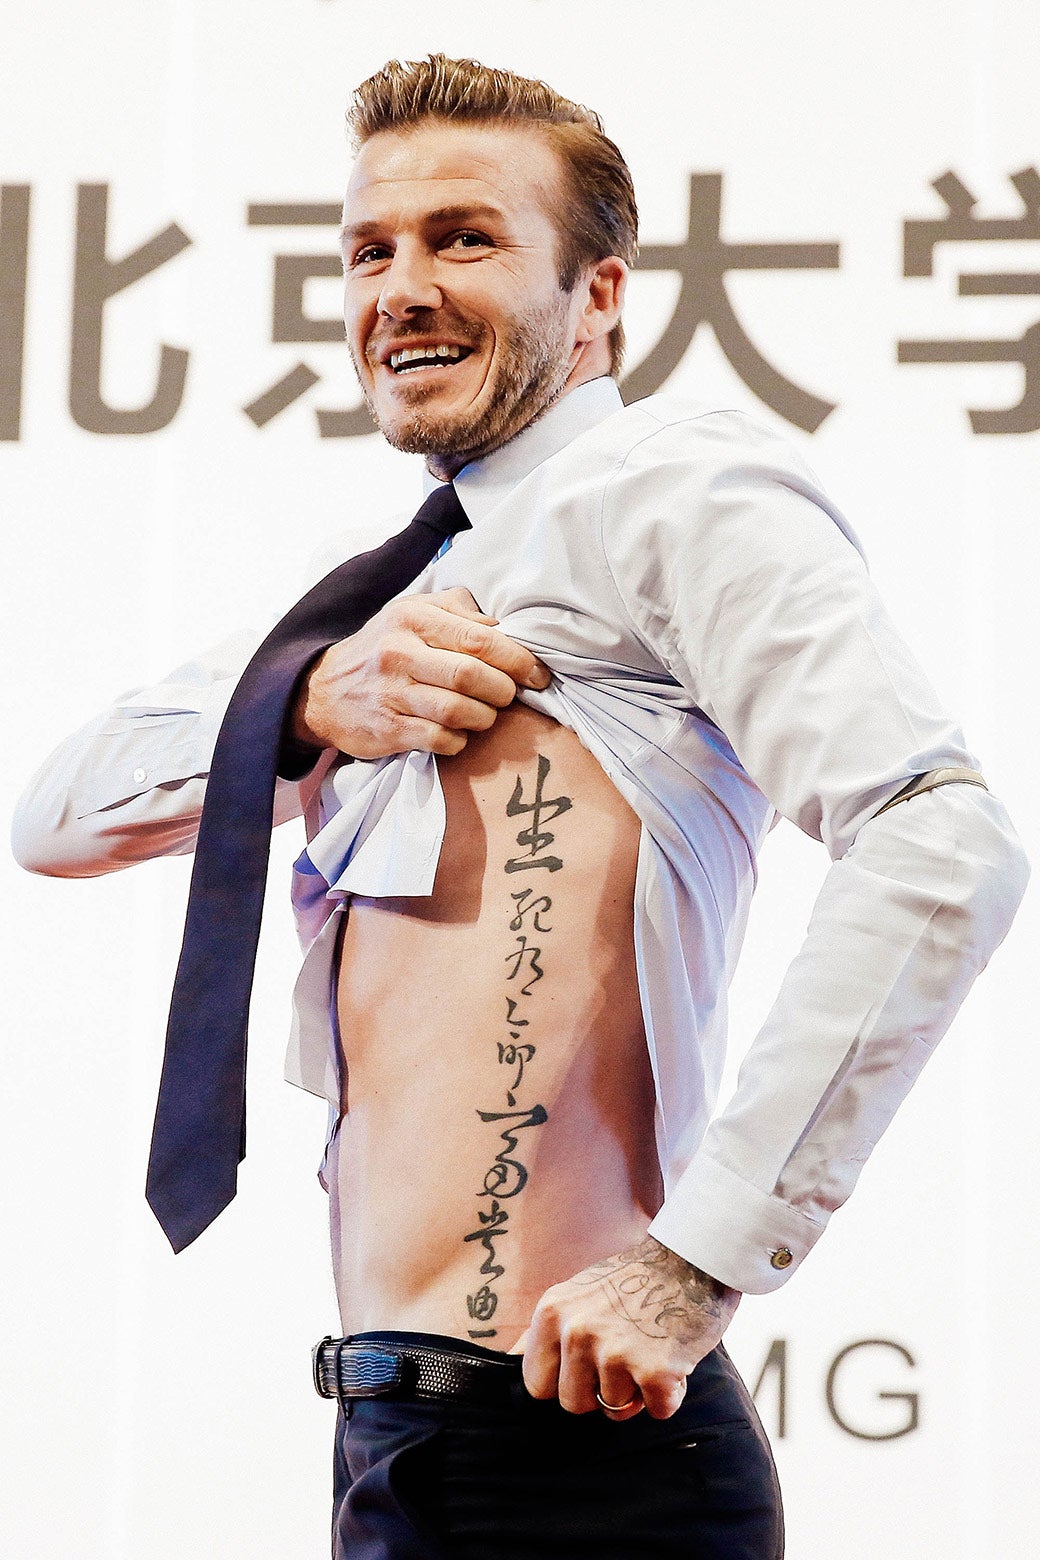 David Beckham shows off a Chinese language tattoo along his torso.